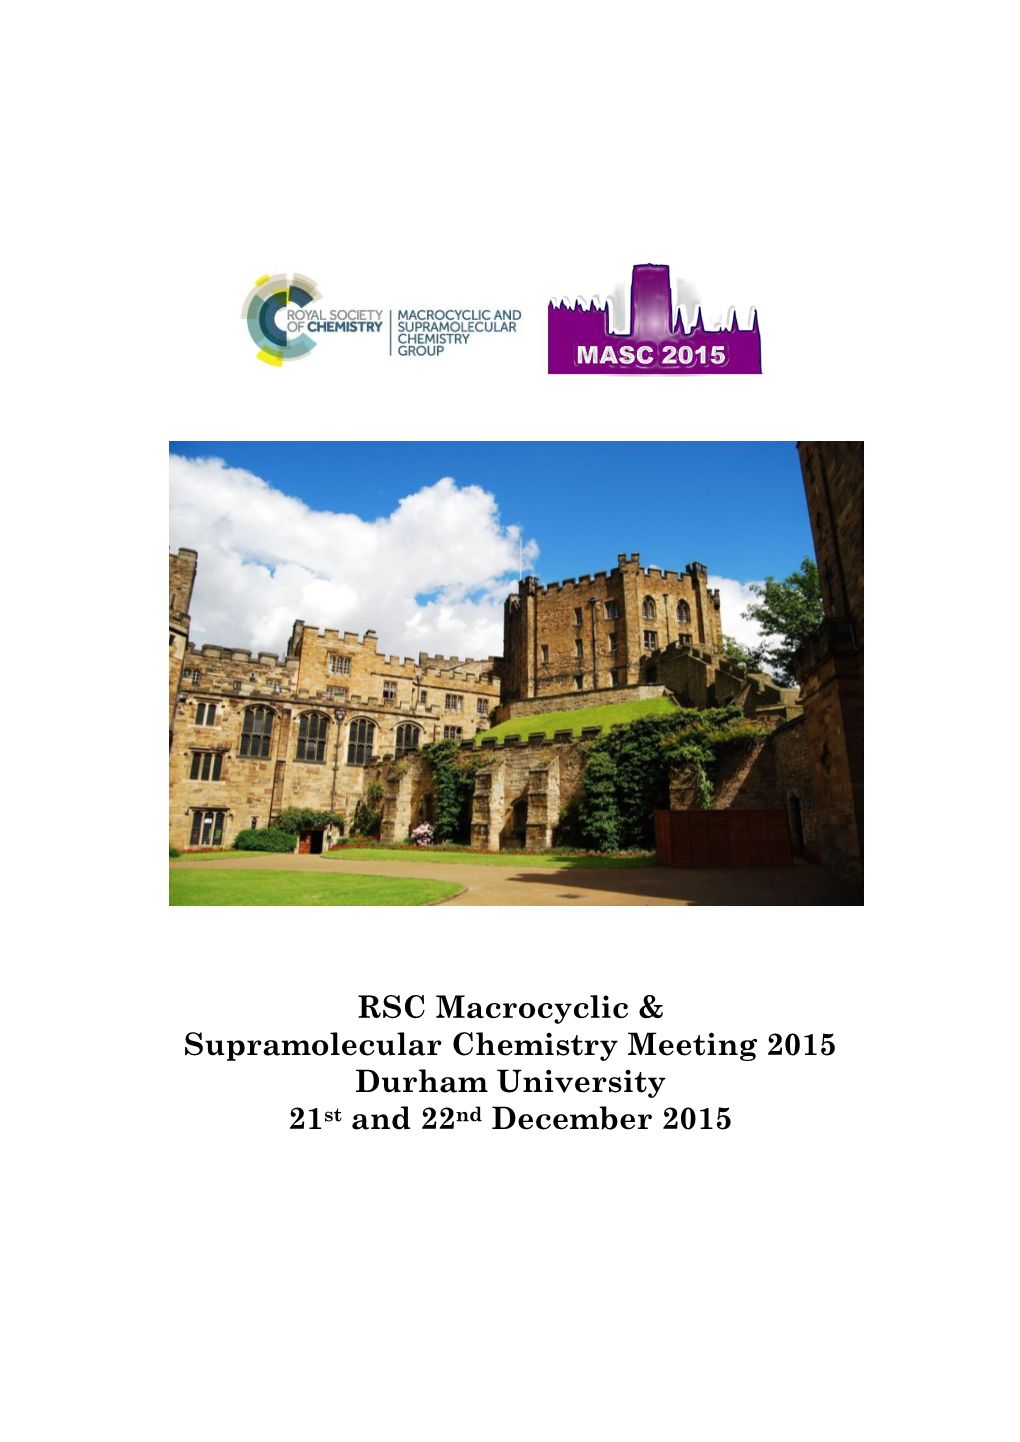 RSC Macrocyclic & Supramolecular Chemistry Meeting 2015 Durham